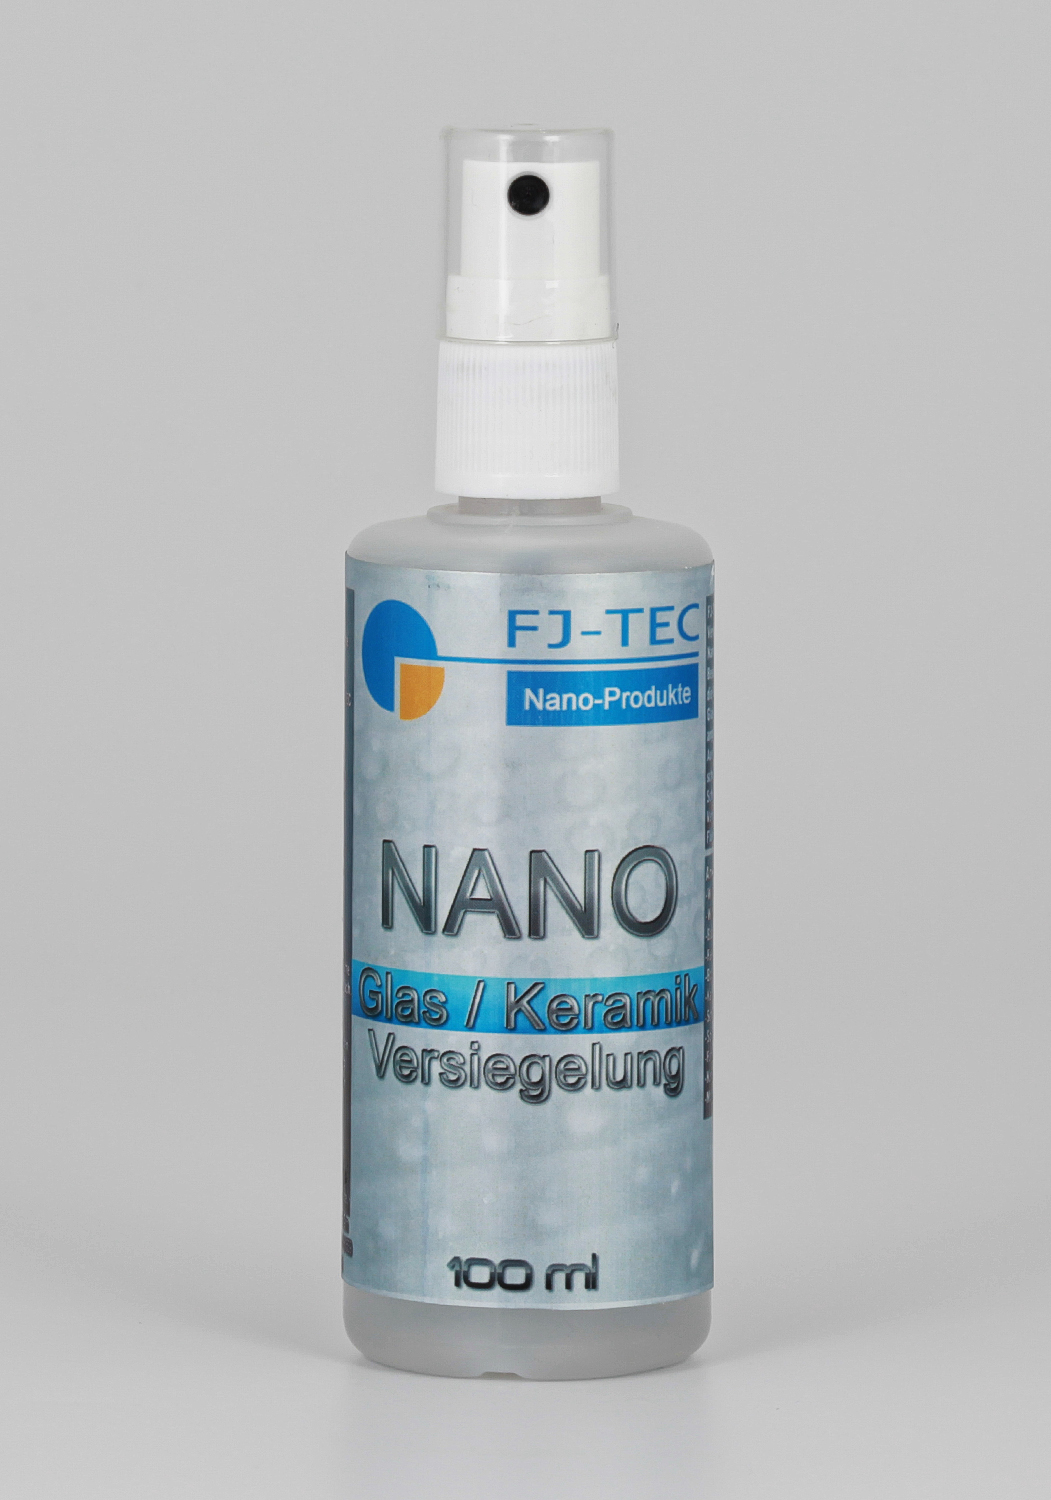 FJ-TEC NANO Glas/Keramik Versiegelung, 100ml